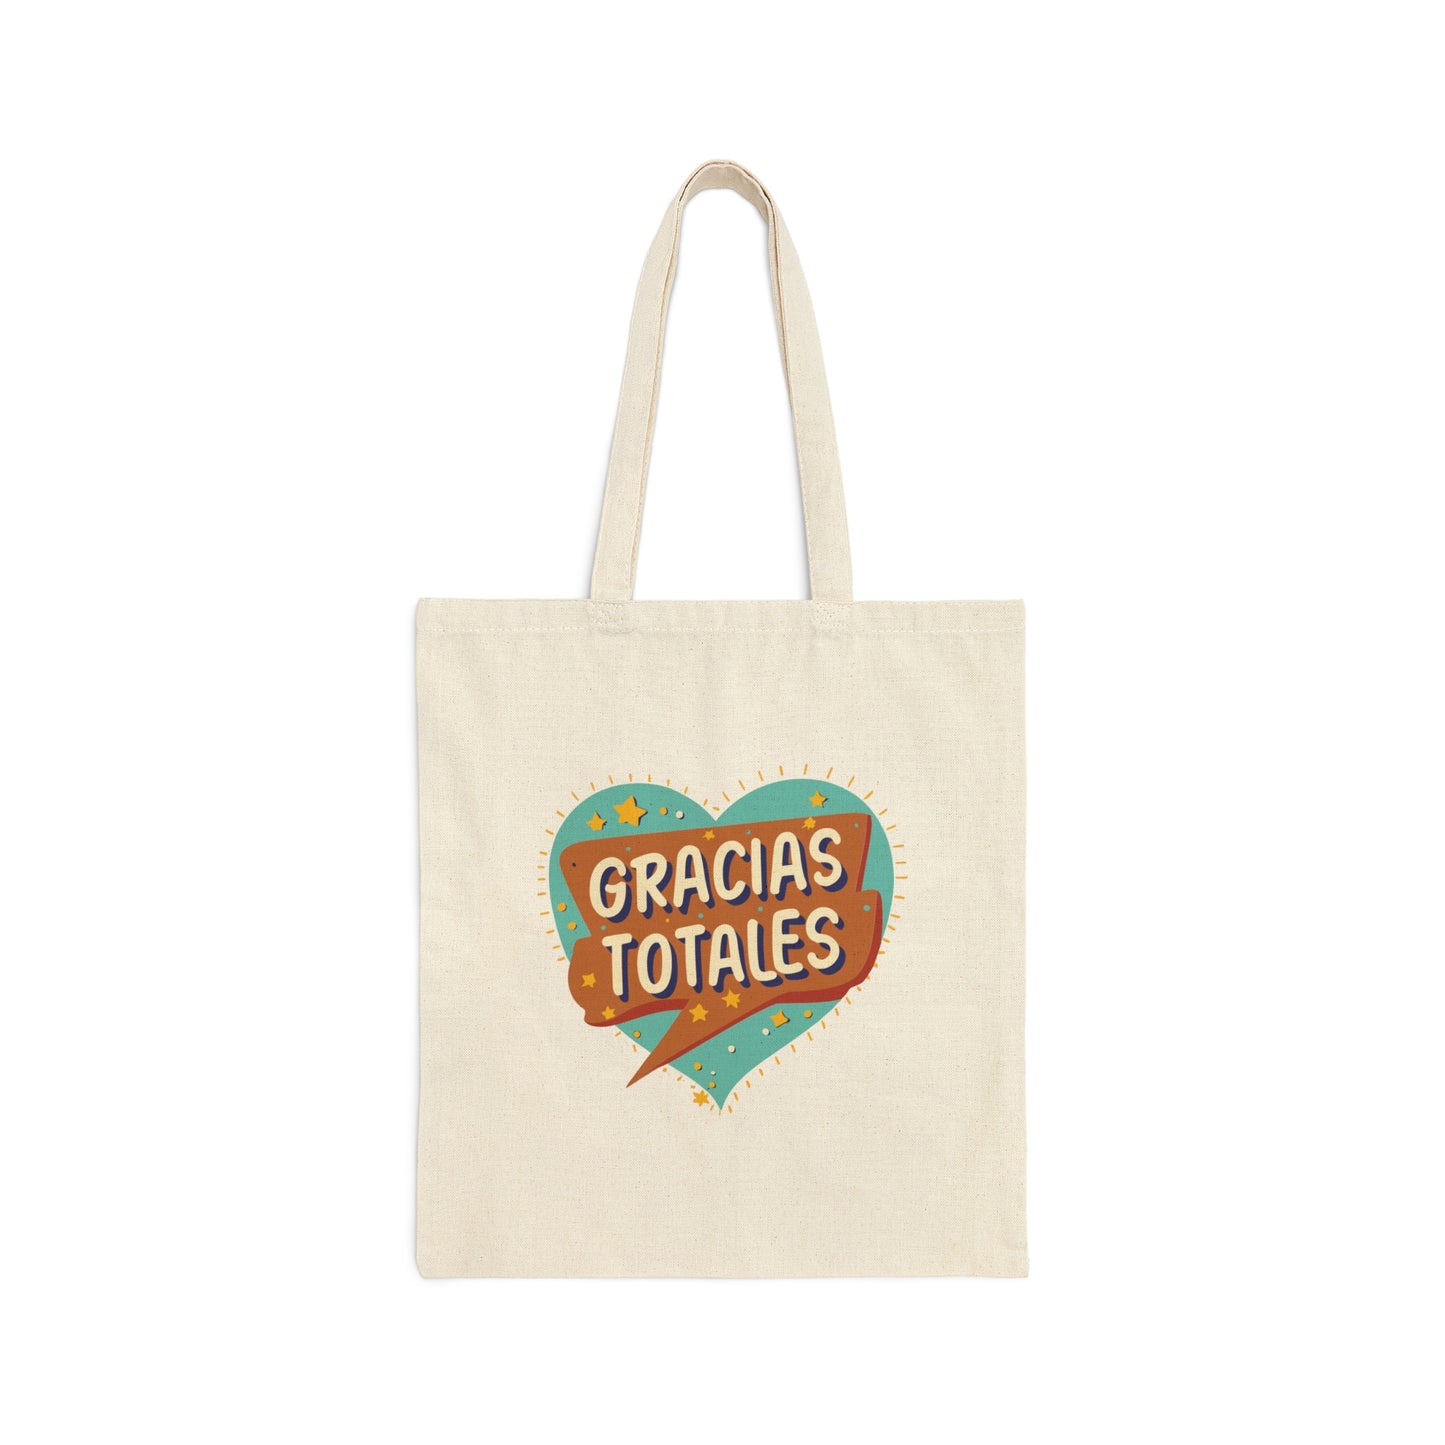 Gracias Totales Canvas Tote Bag - Iconic Phrase Shopper, Stylish Latin Music Tribute Bag